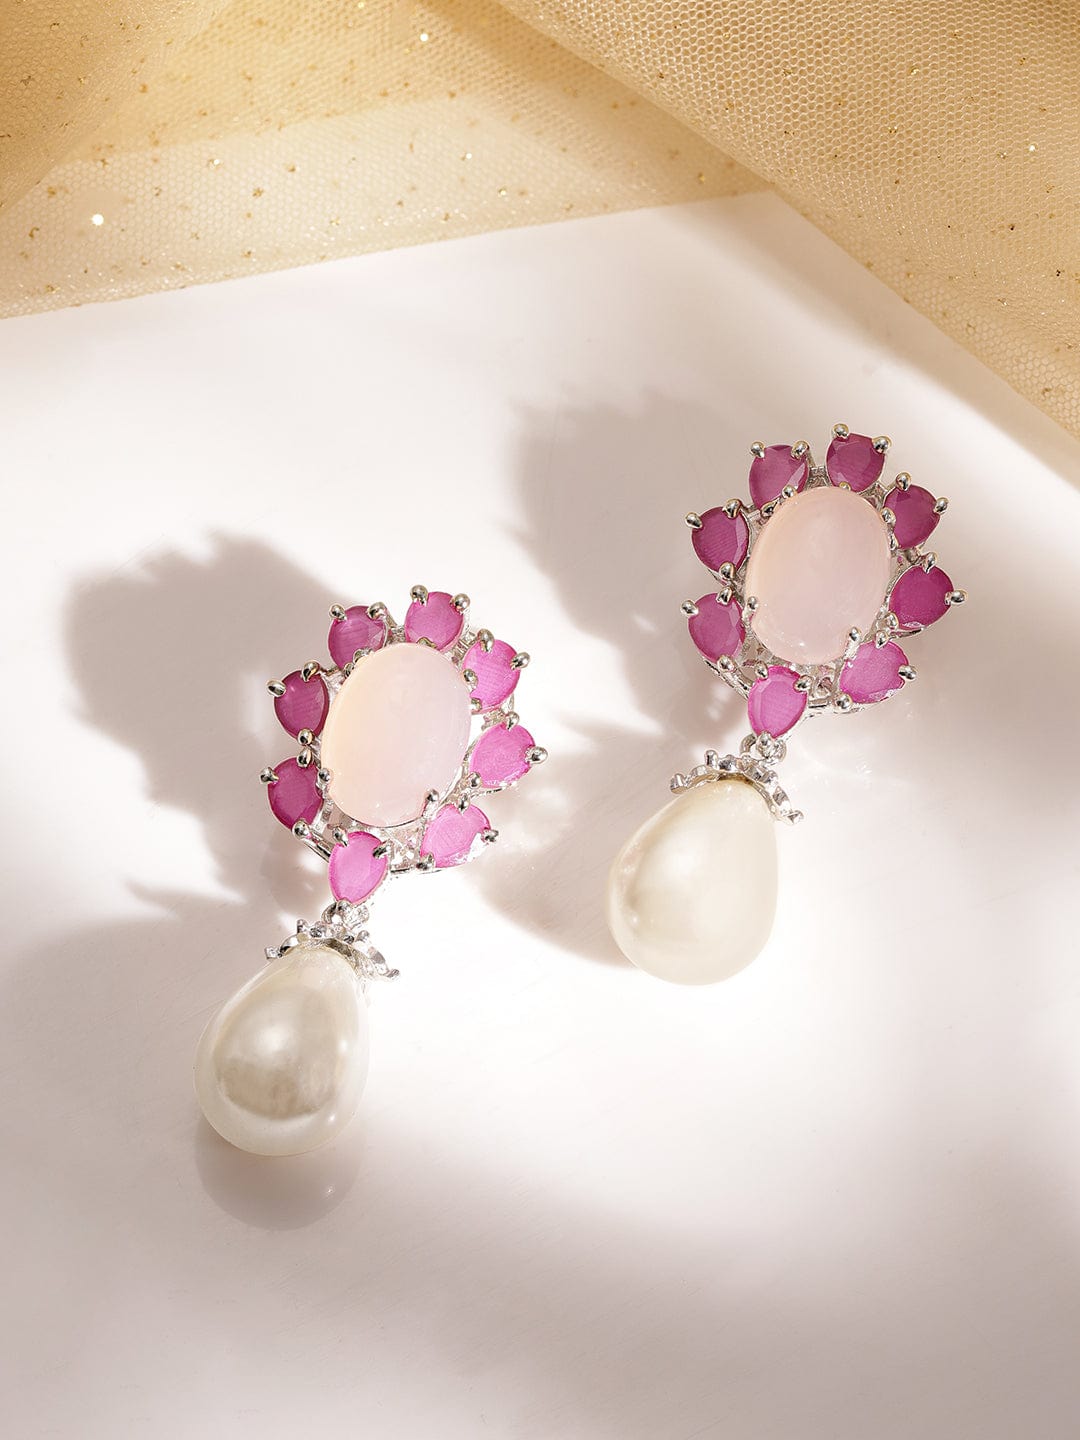 Copy of Blooms in Oxidized Grace: Floral Designs Pearl Hanging Drop Earrings Earrings